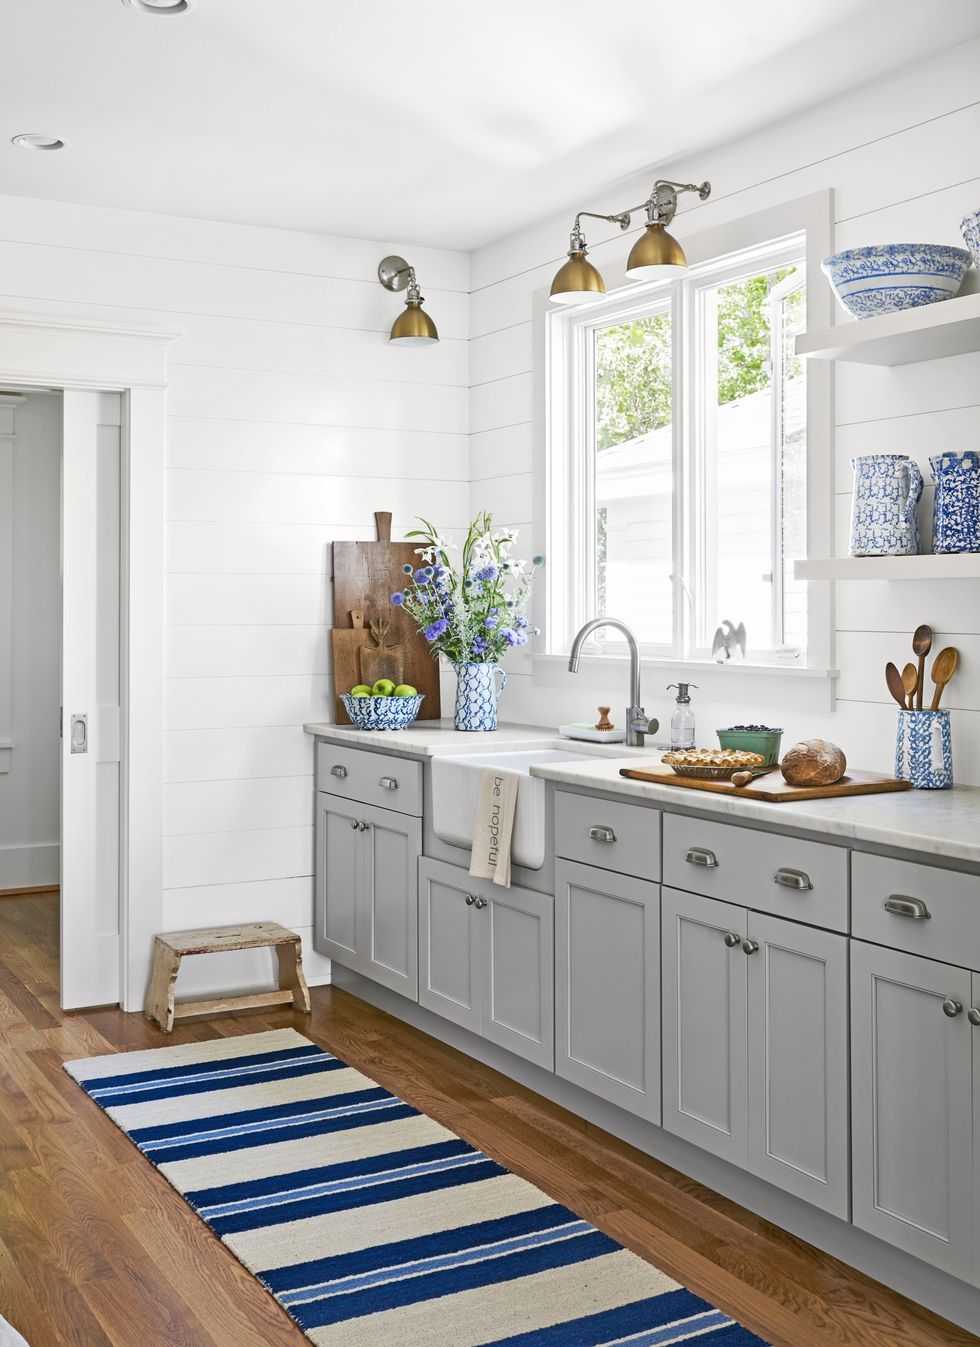 15 Best Galley Kitchen Design Ideas Remodel Tips For Galley Kitchens,Cool Modern Bedroom Lighting Design